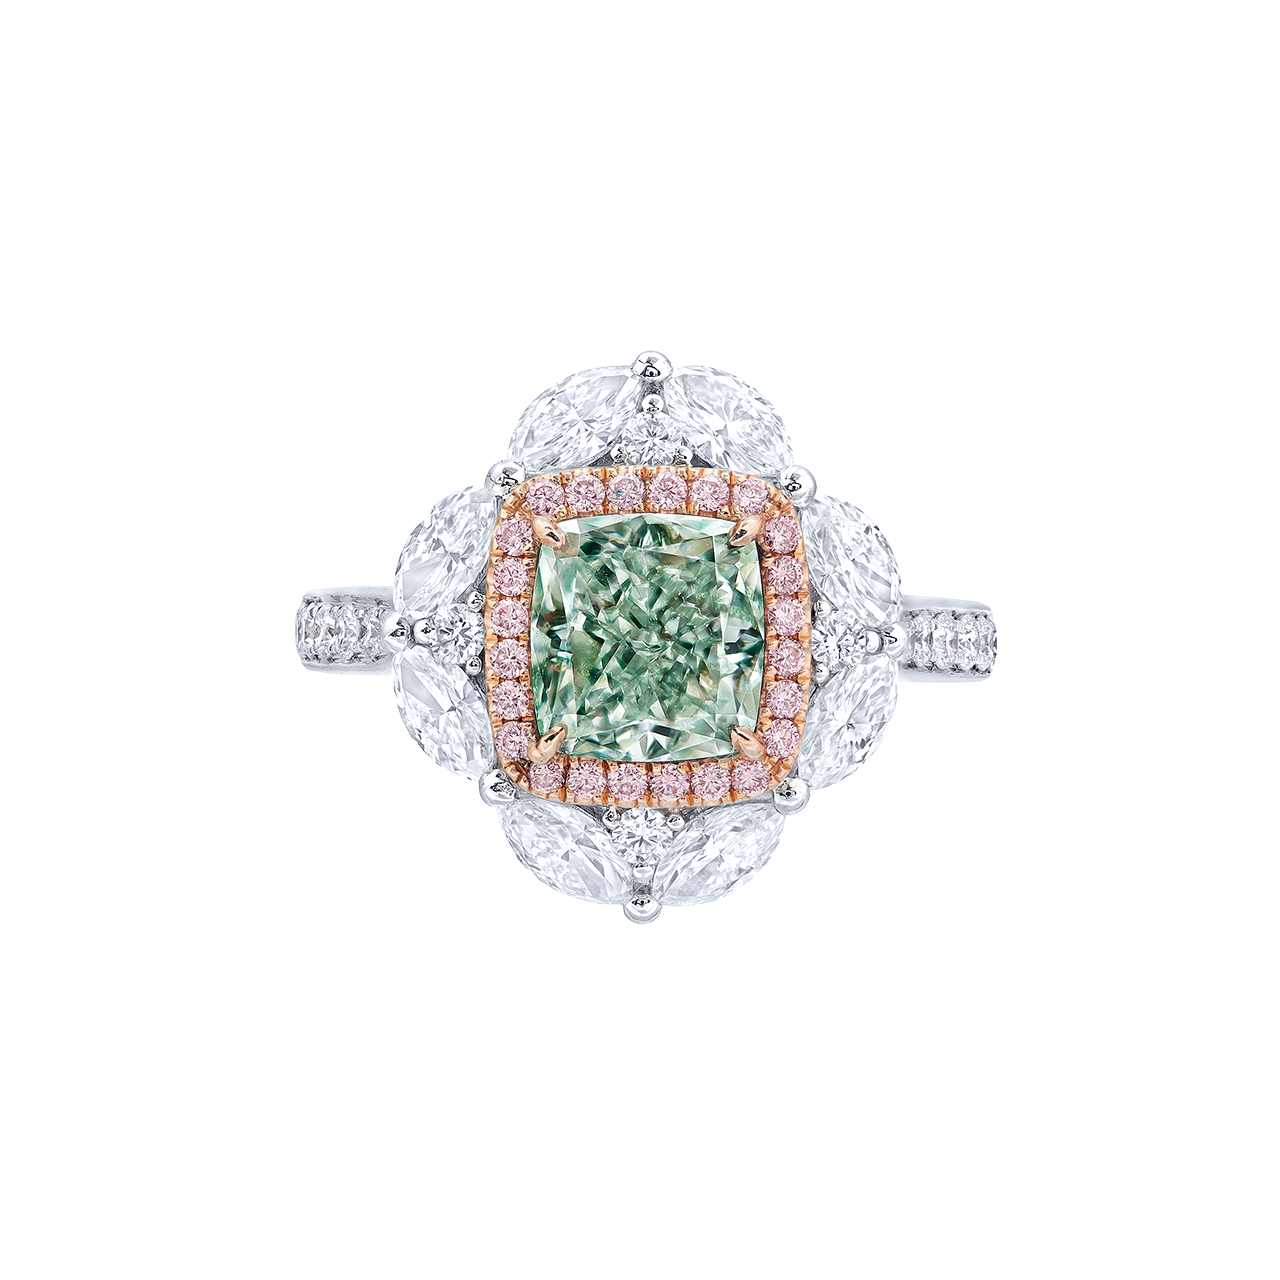 GIA 2.03克拉 淡彩綠鑽鑽戒/墜 二用
Fancy Light Green Colored Diamond 
and Diamond Ring / Pendant